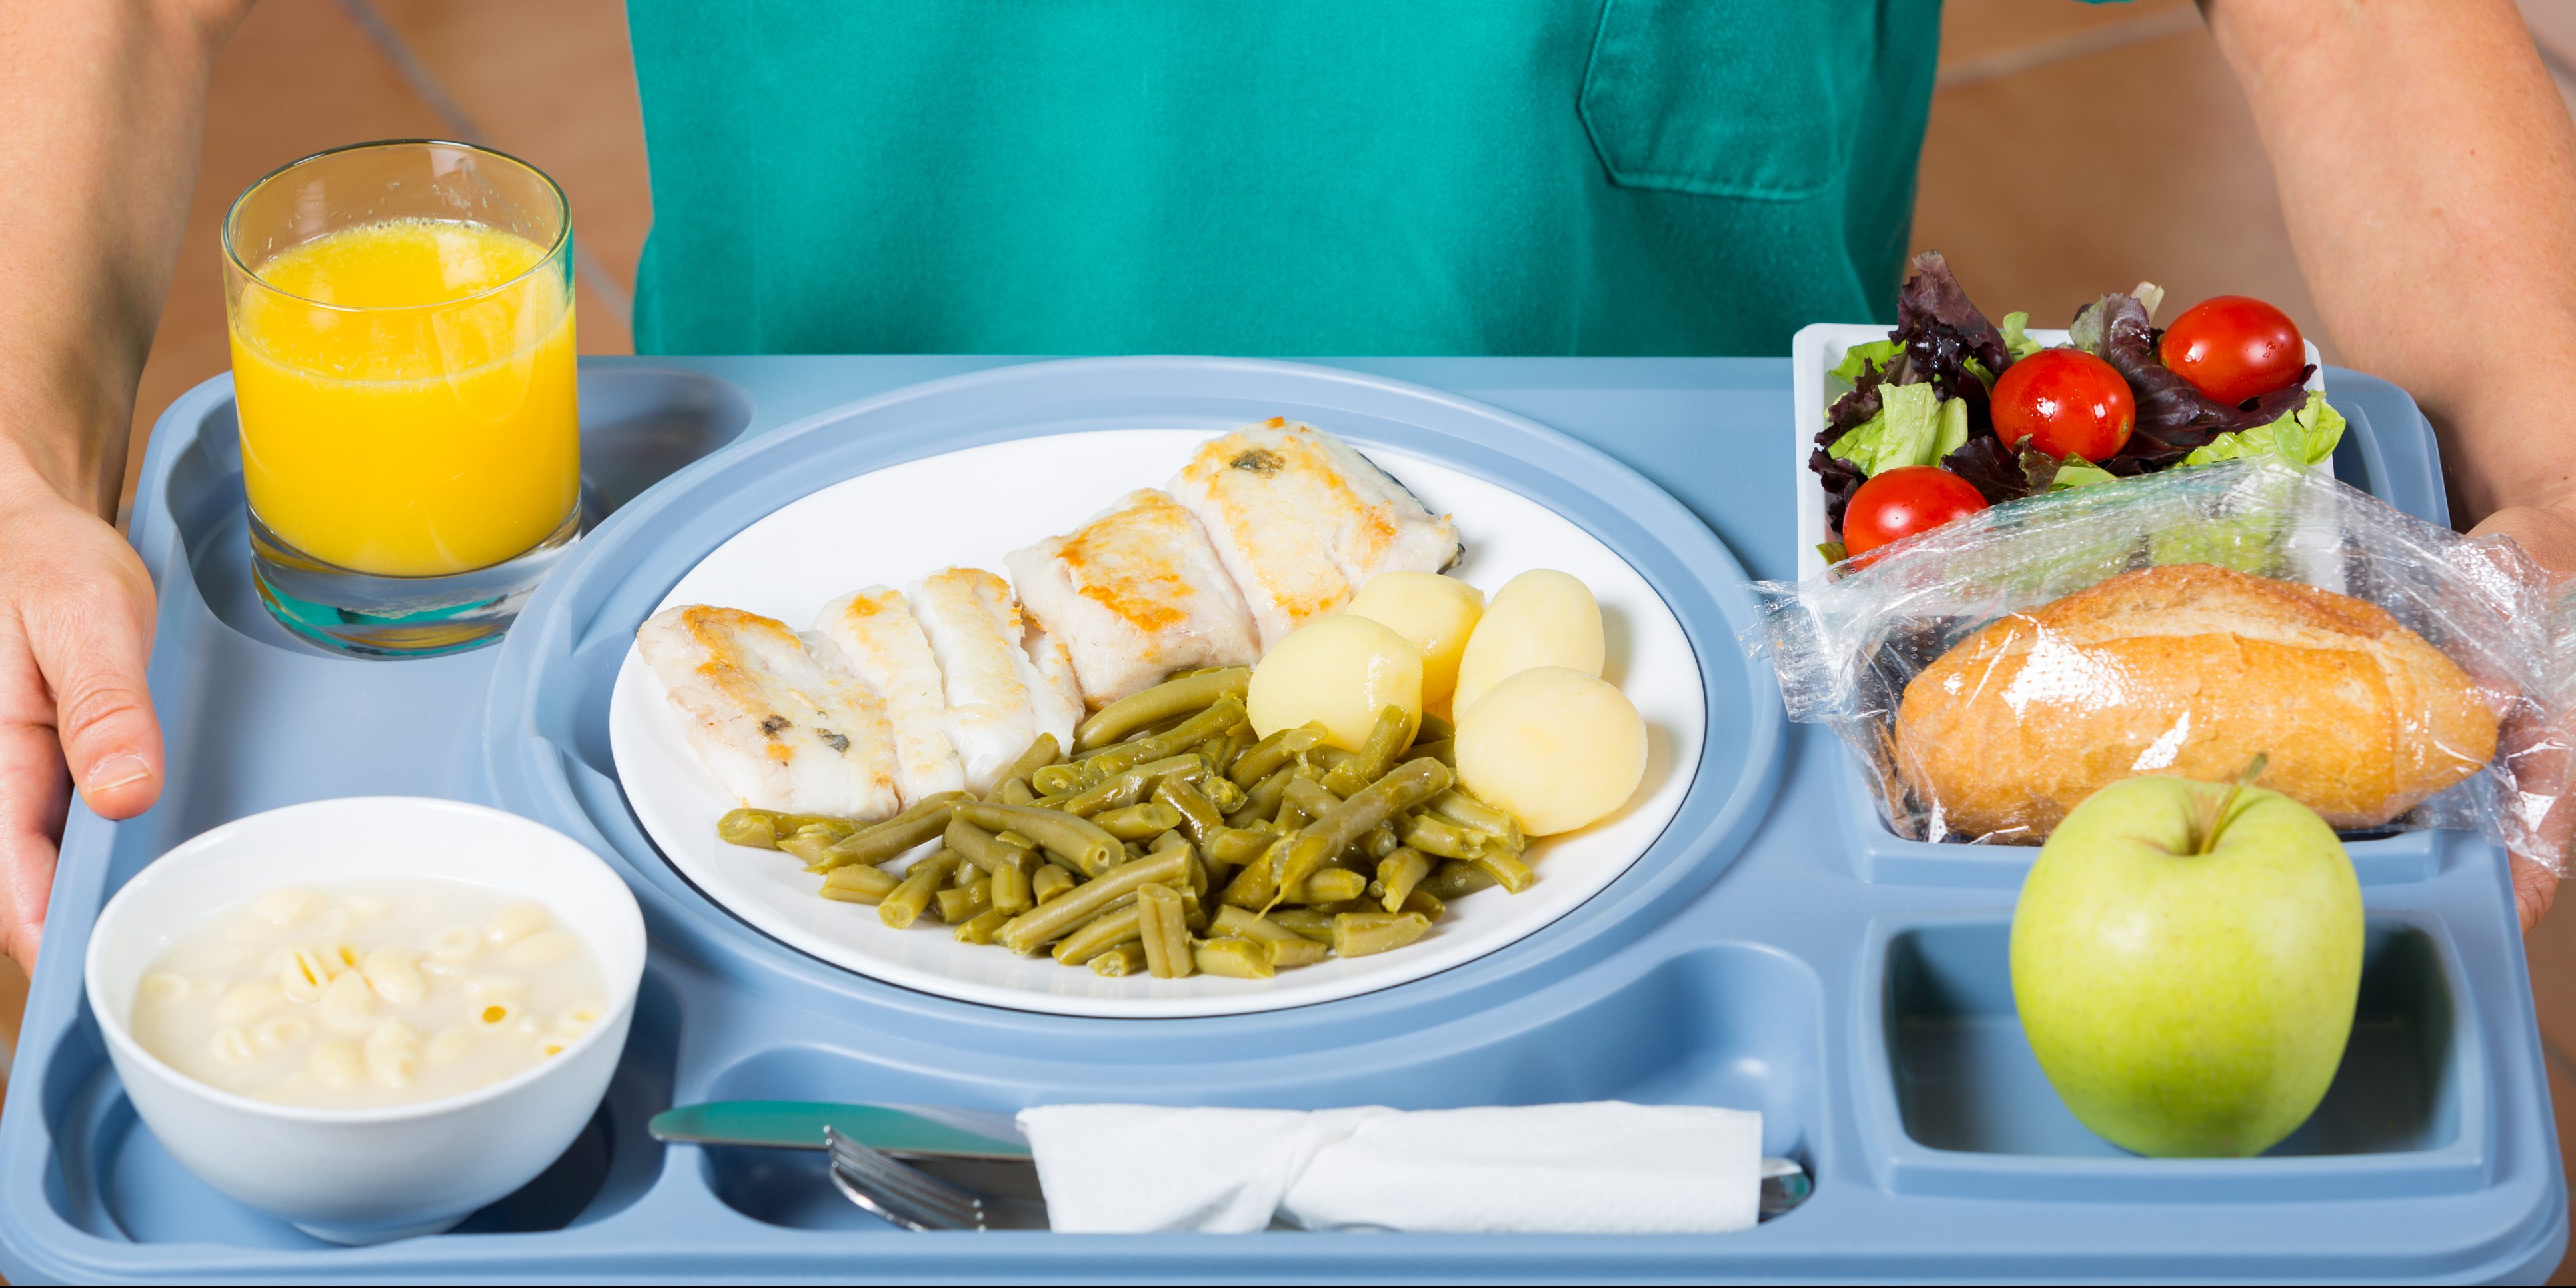 meal-tray-of-a-hospital